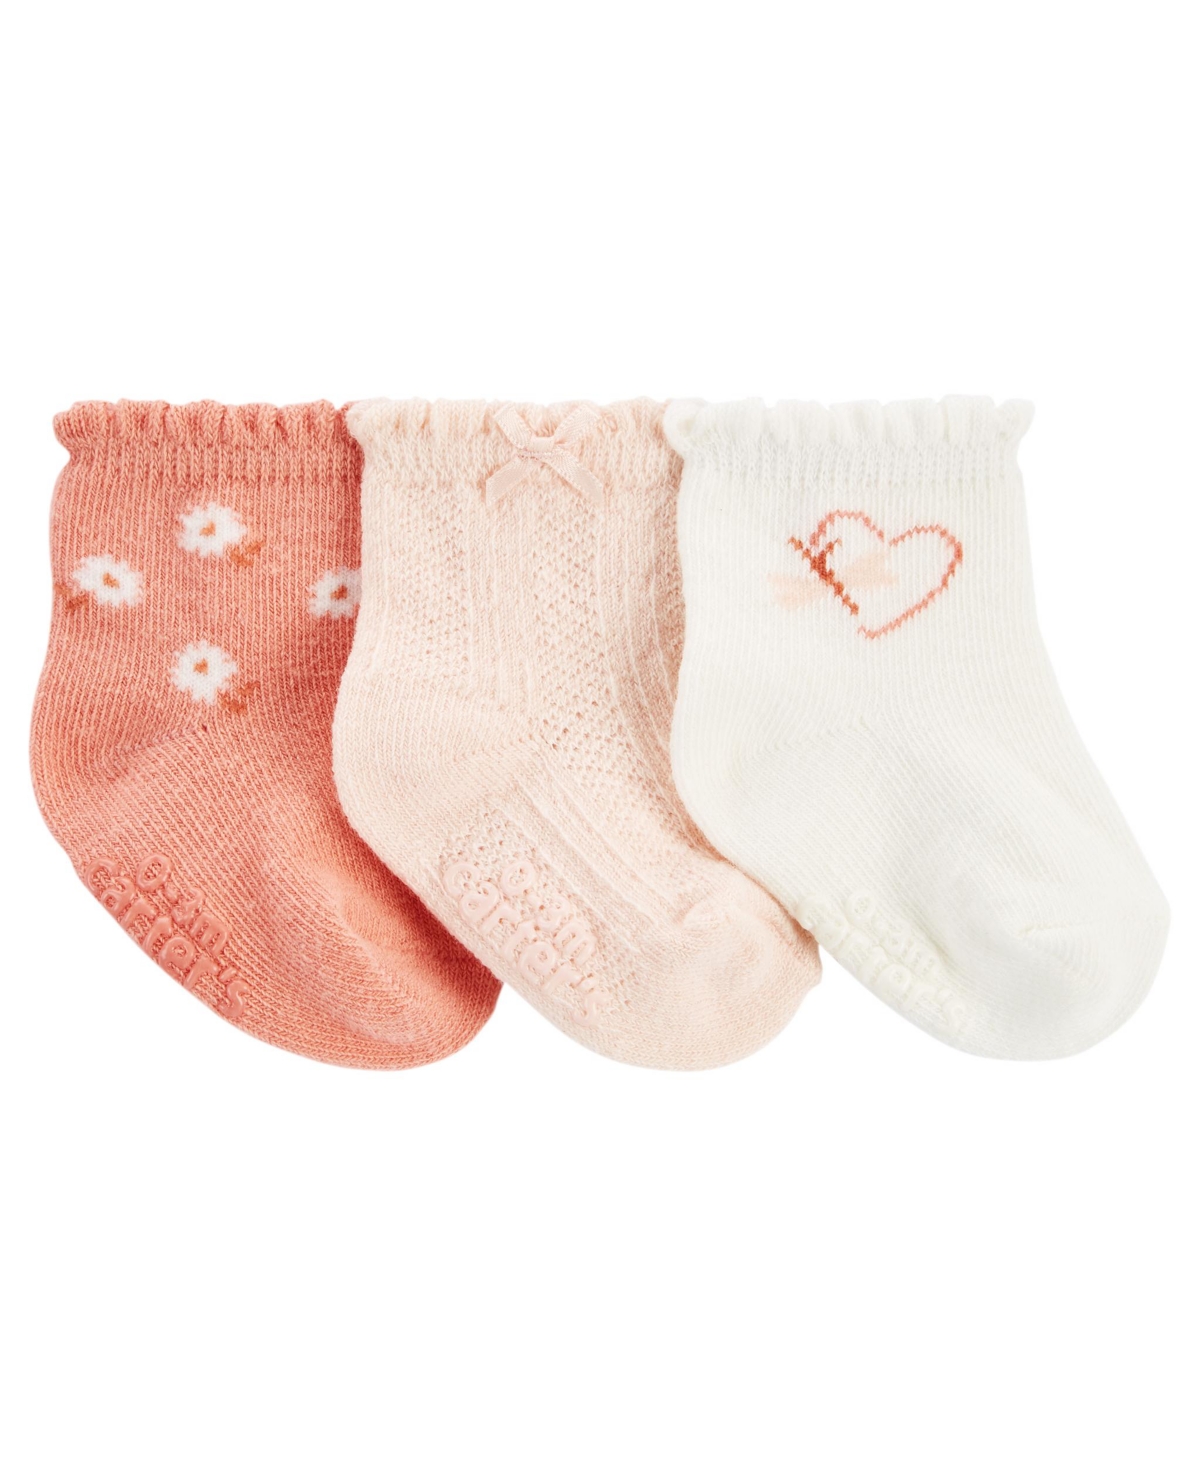 Carter's Baby Girls Socks, Pack Of 3 In Pink